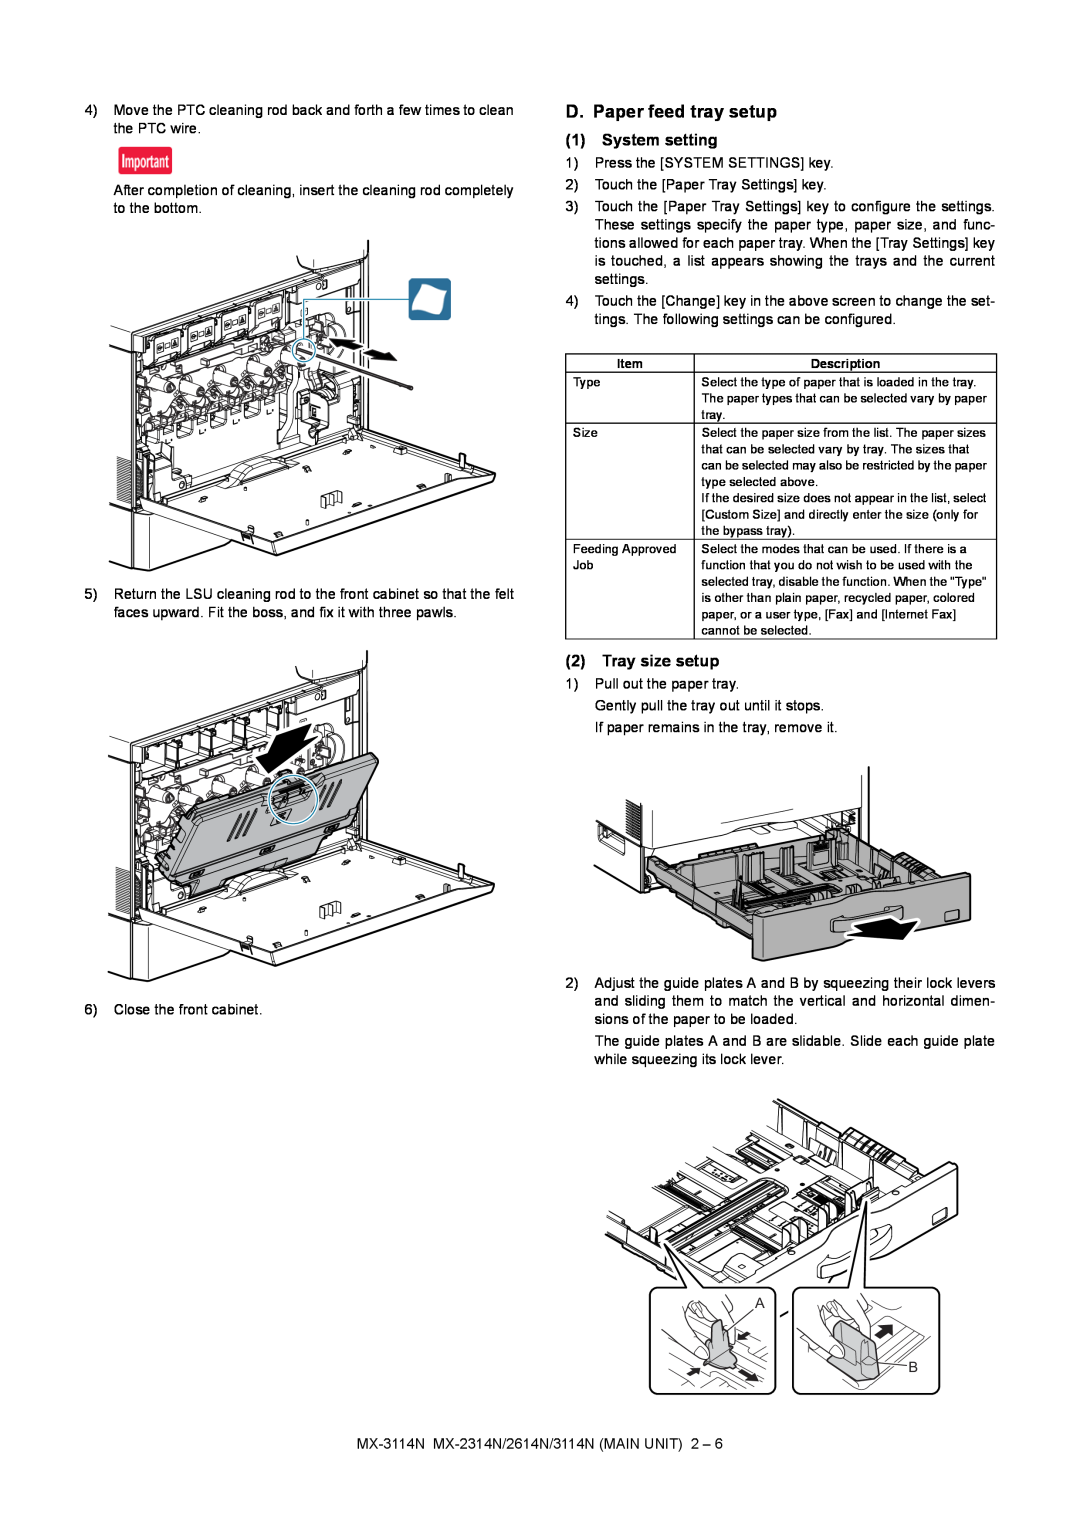 Sharp MX-3114N, MX-2614N, MX-2314N installation manual D. Paper feed tray setup, System setting, Tray size setup 